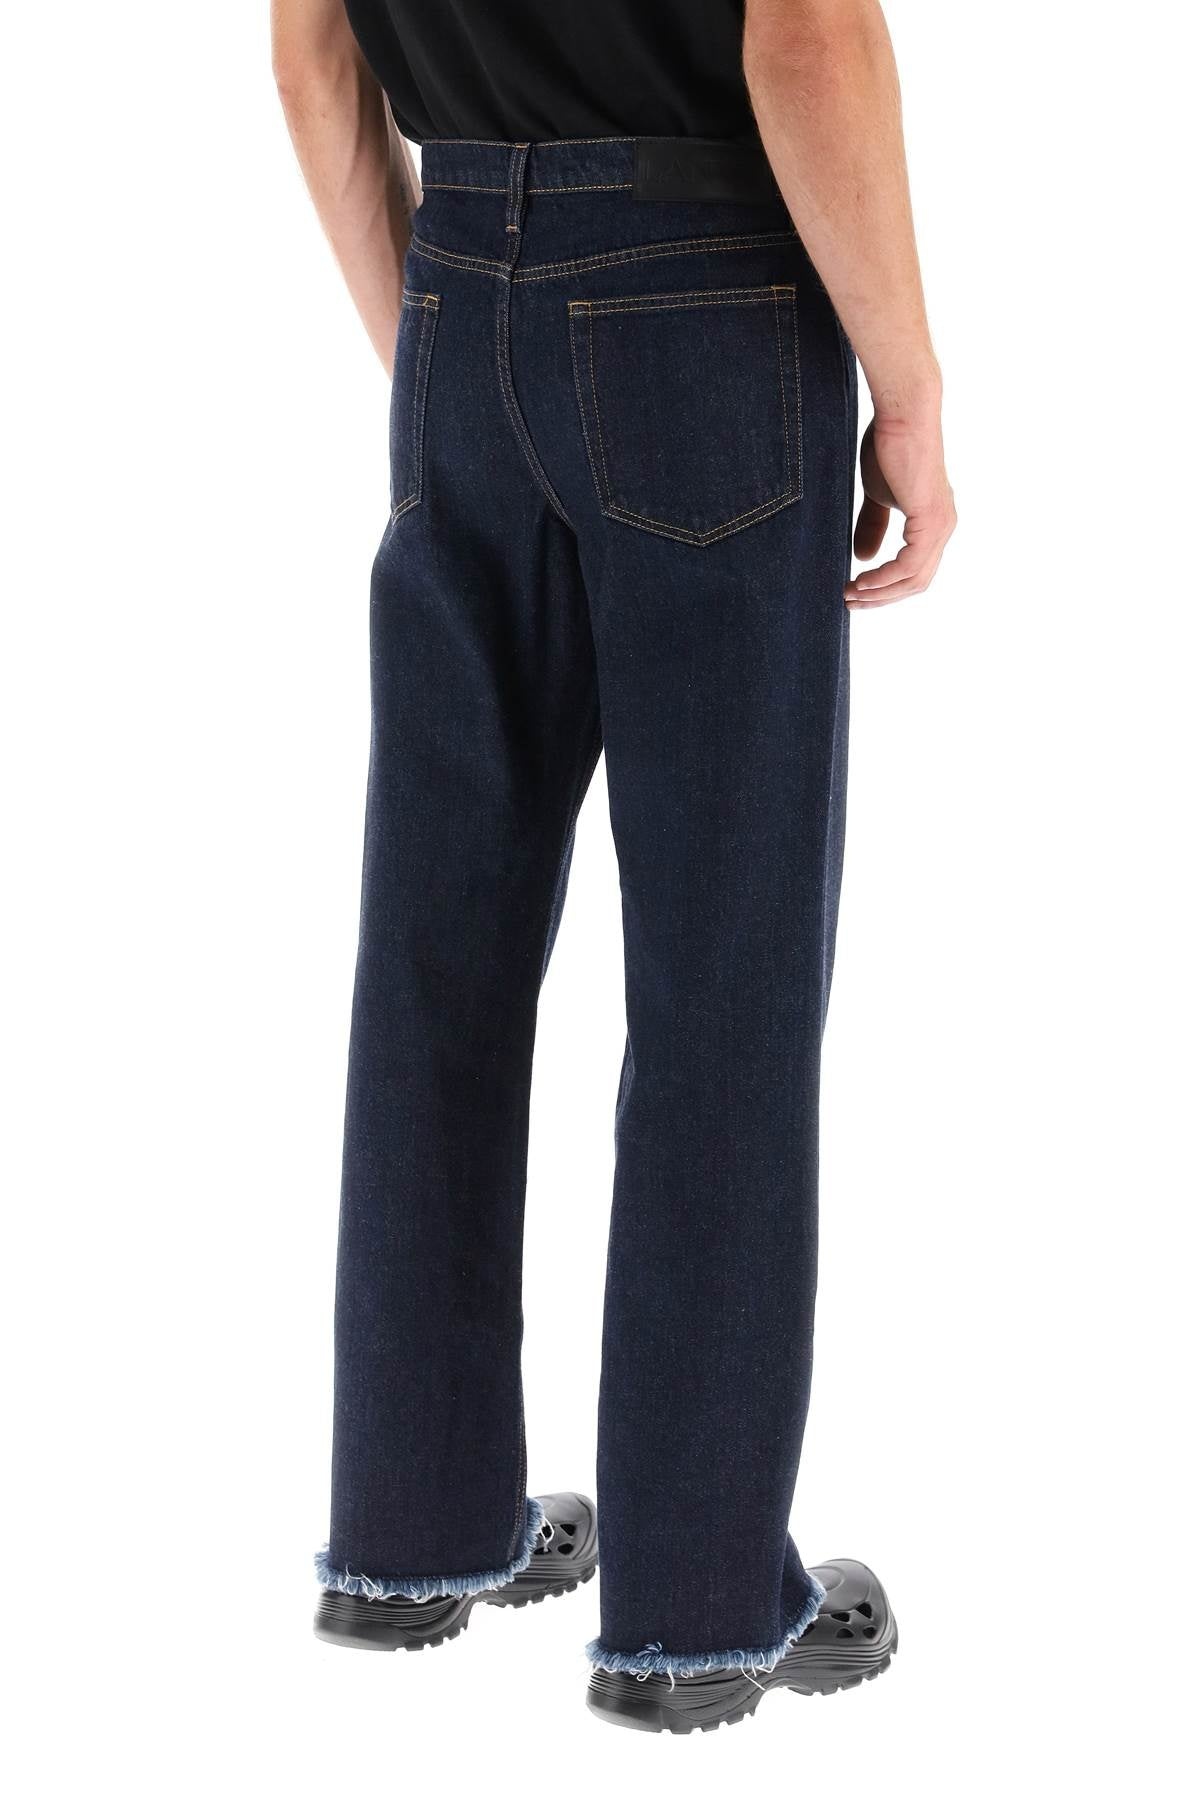 Jeans With Frayed Hem - 2